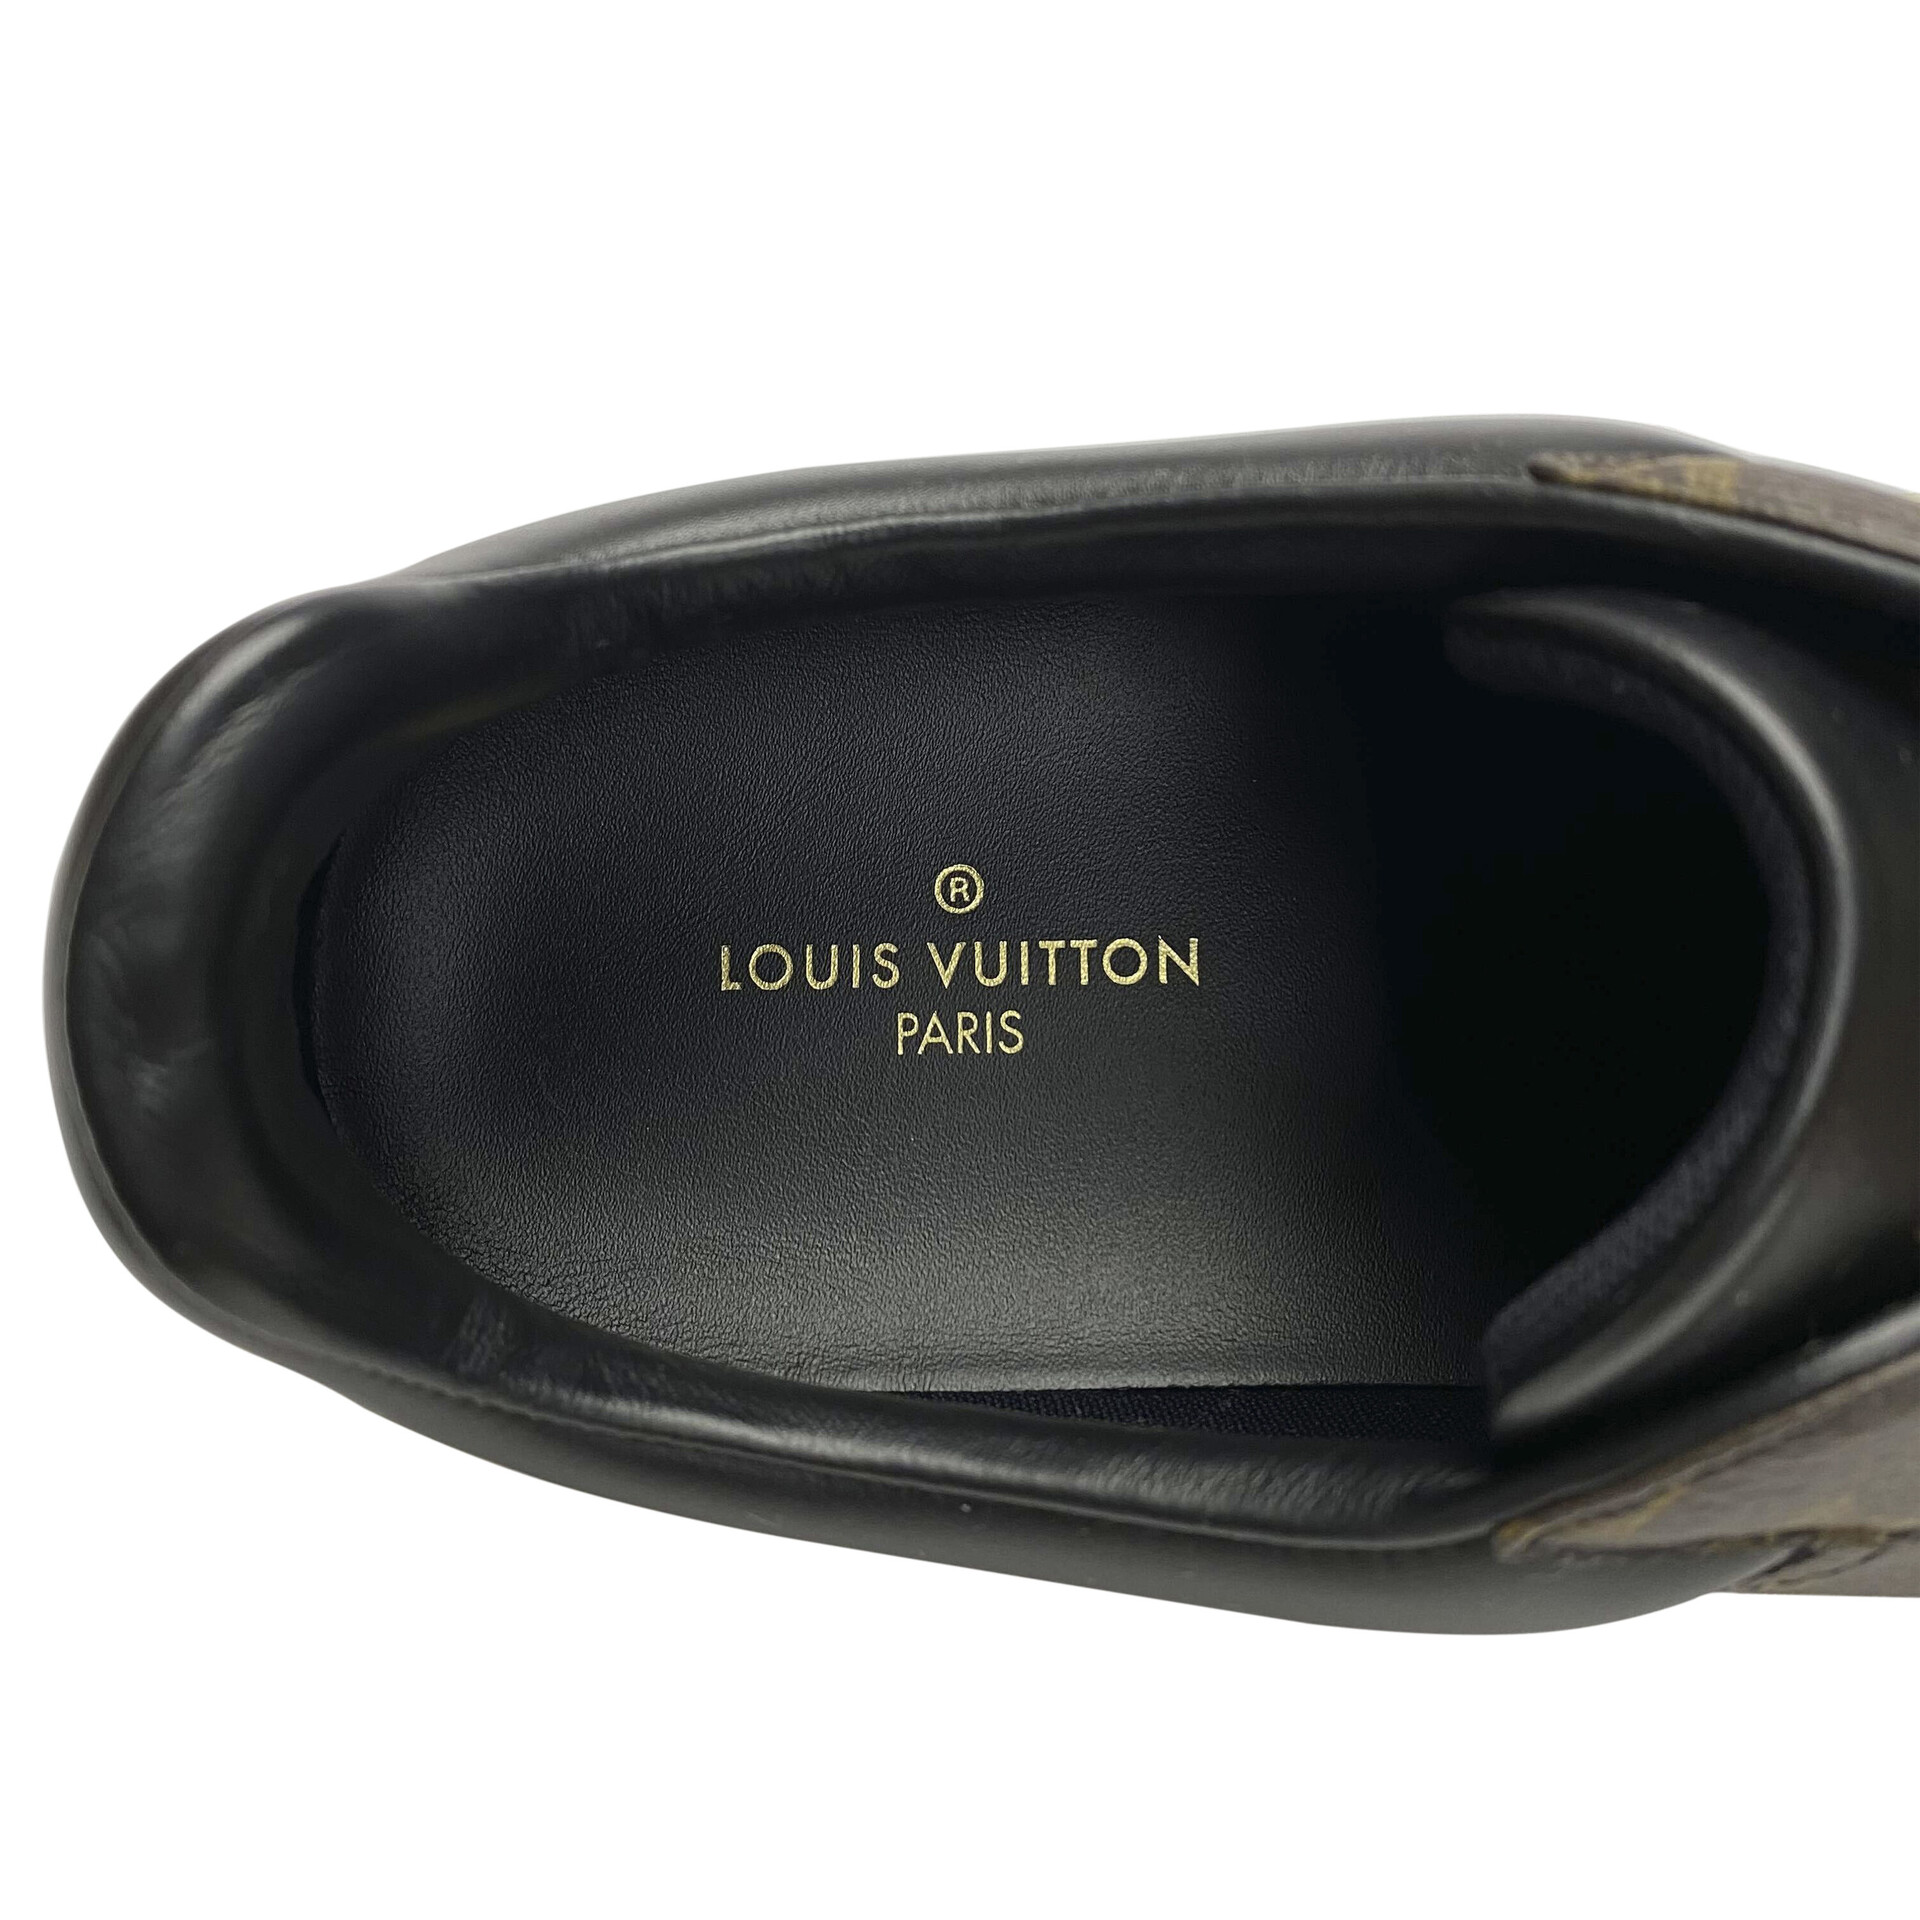 Sneaker Louis Vuitton Luxembourg